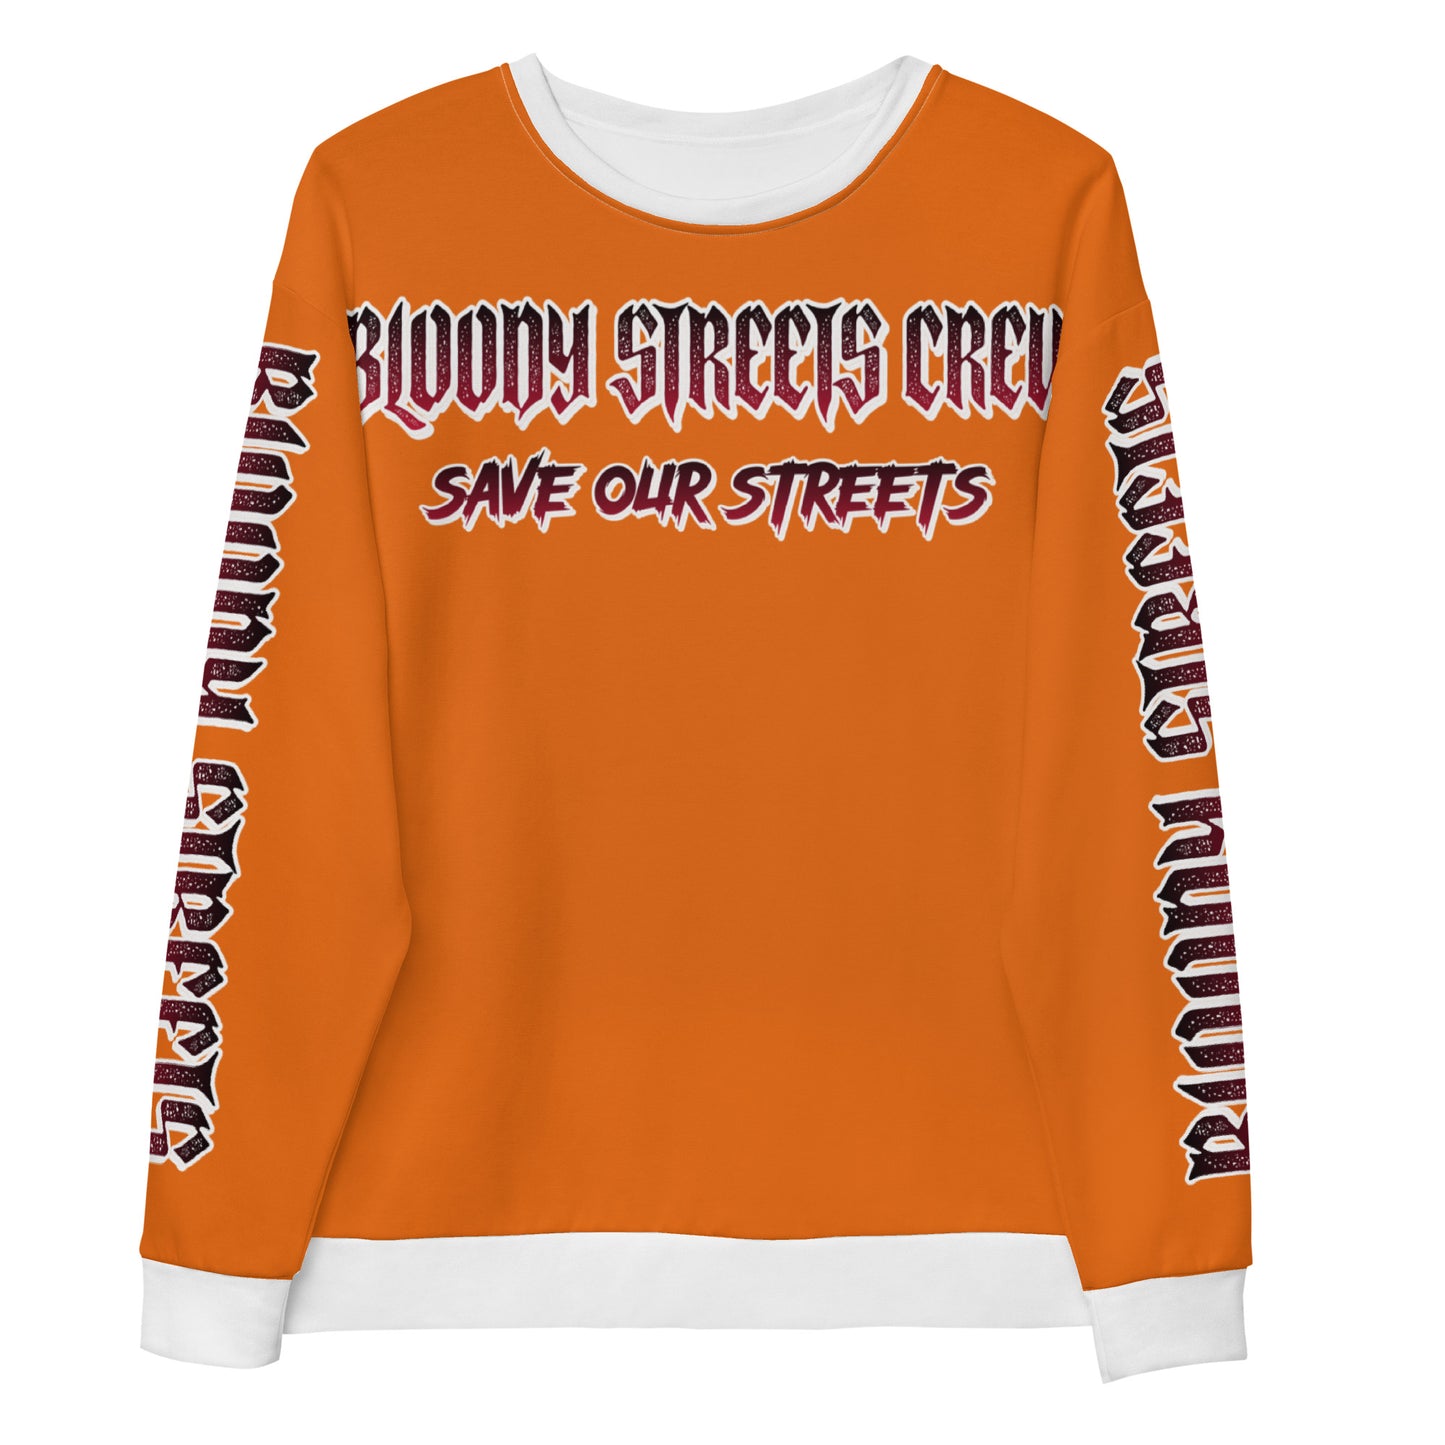 BLOODY STREETS Crew Member Streetwear Pullover Orange - BLOODY-STREETS.DE Streetwear Herren und Damen Hoodies, T-Shirts, Pullis